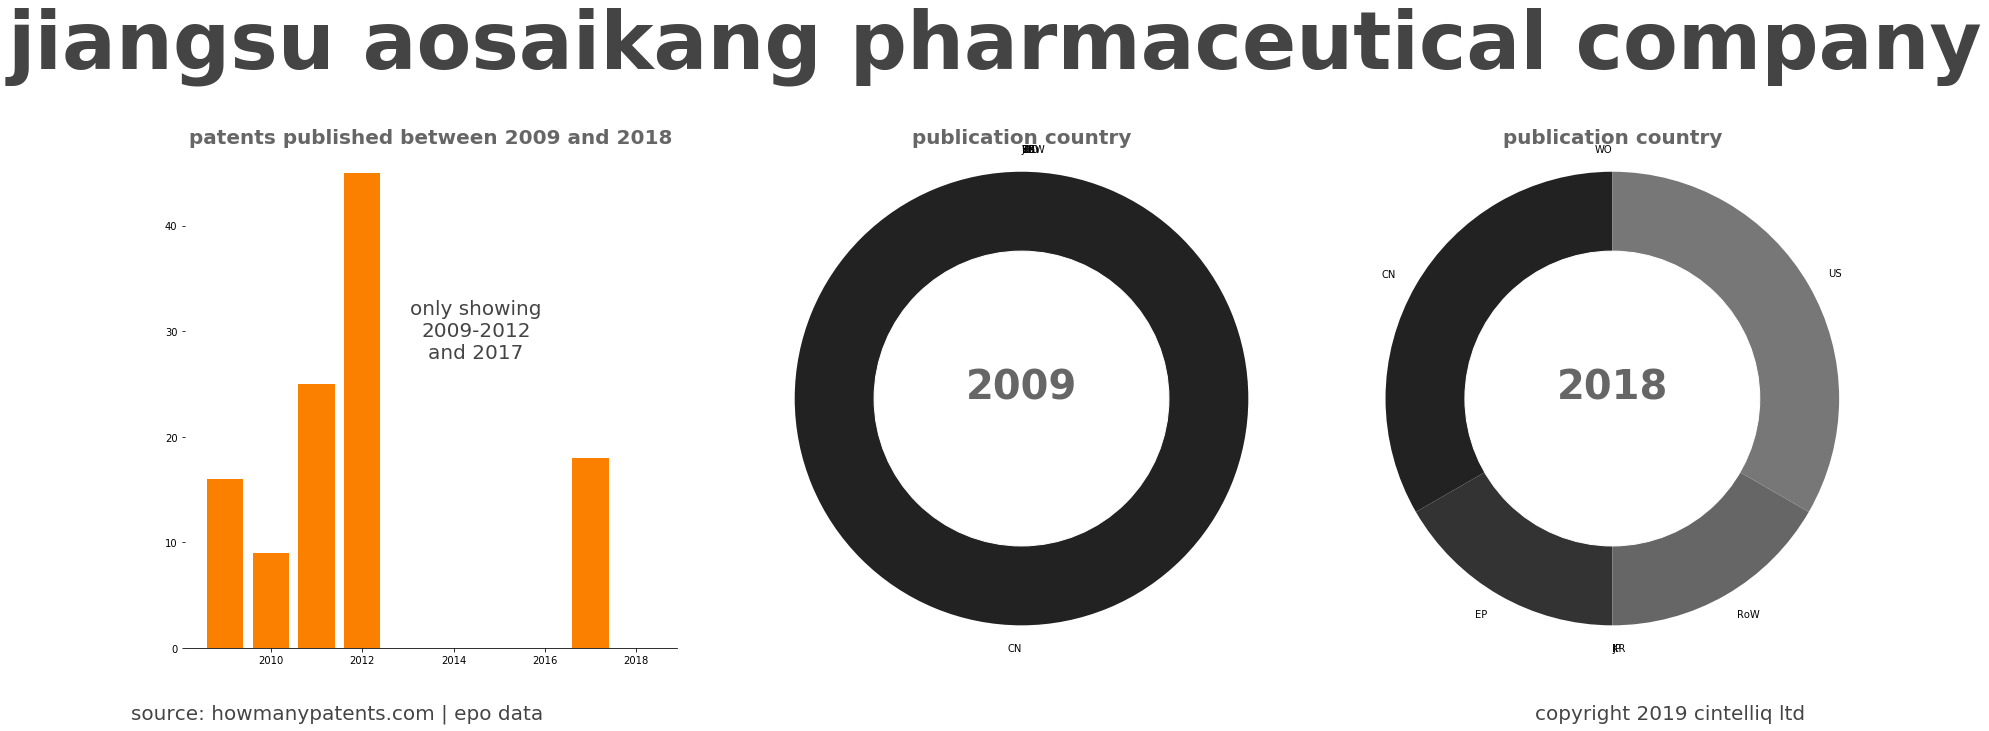 summary of patents for Jiangsu Aosaikang Pharmaceutical Company